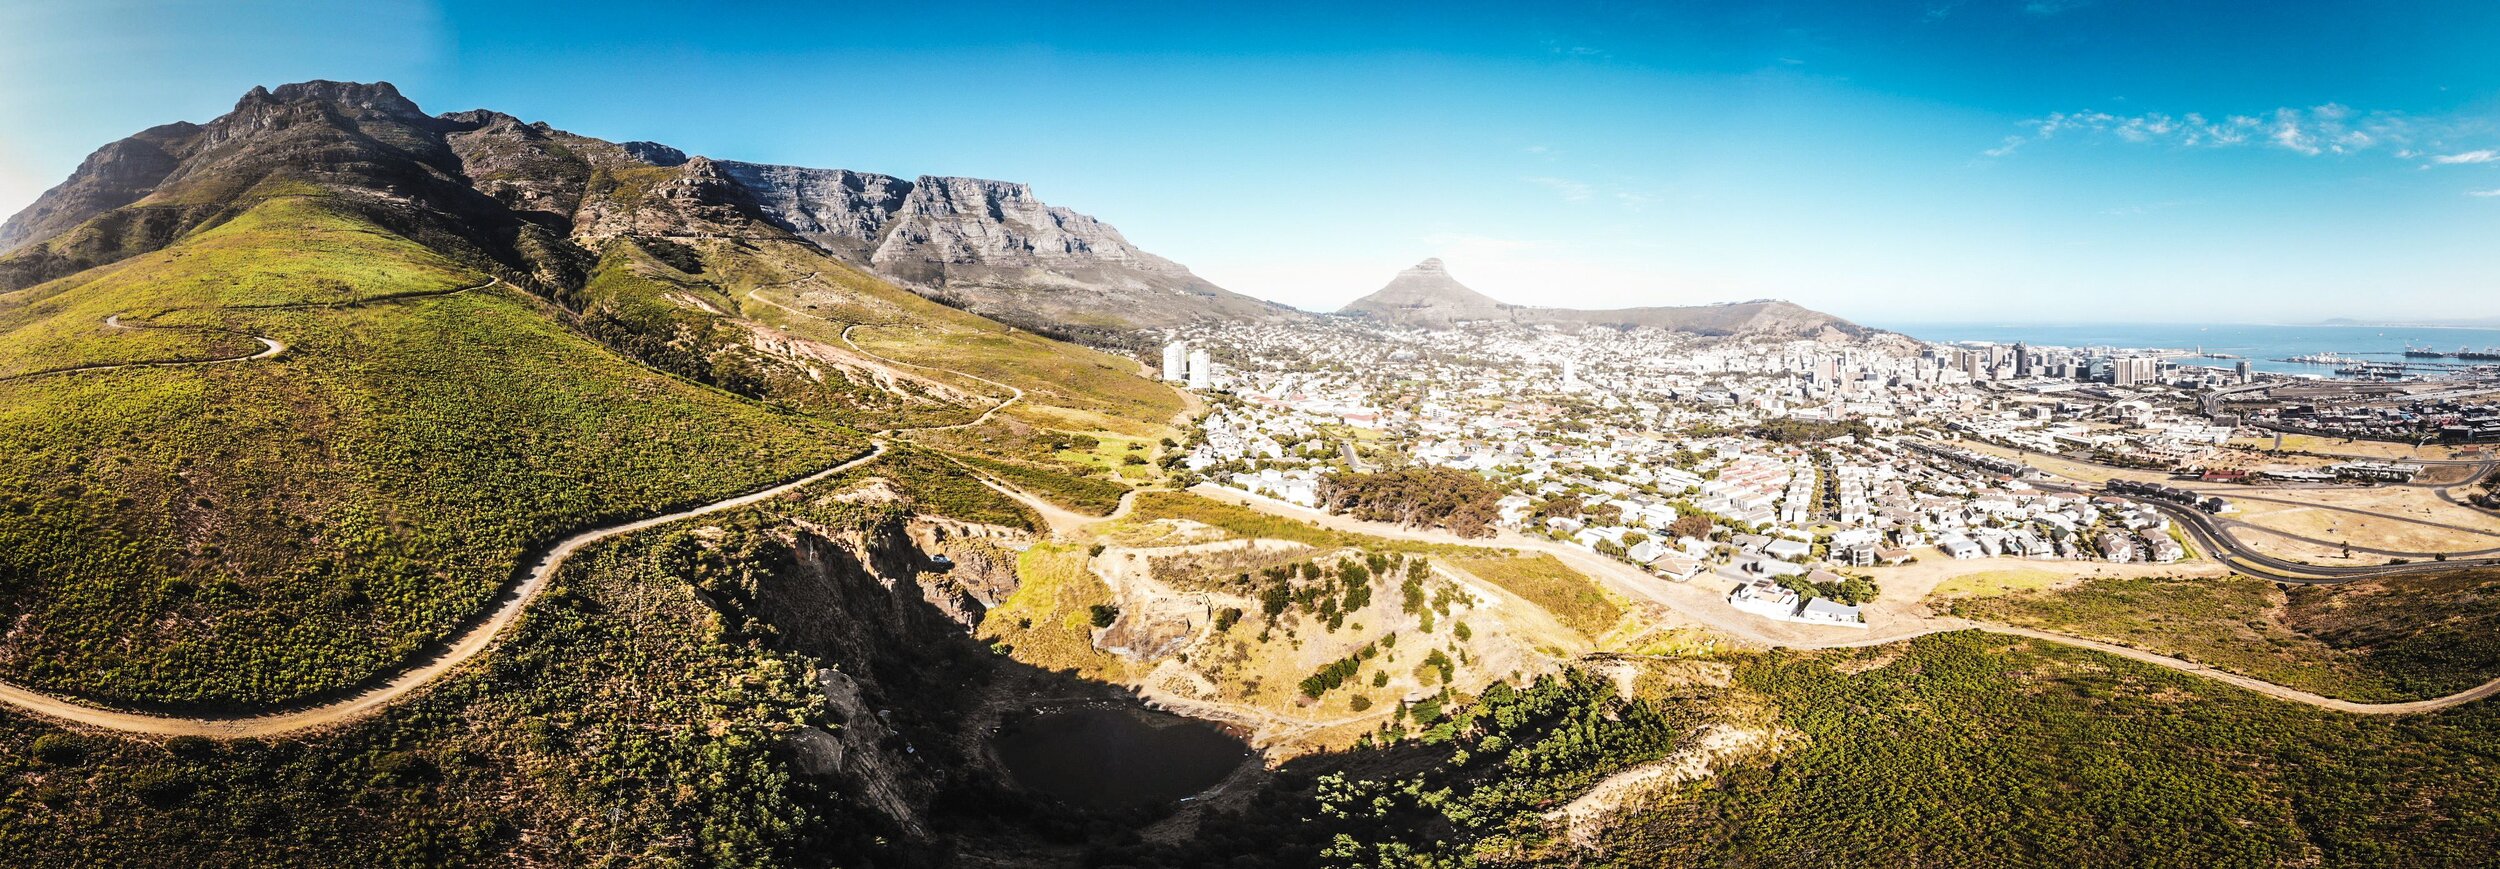 Nicki-Lange-Ultra-Trail-Cape-Town-13.JPG